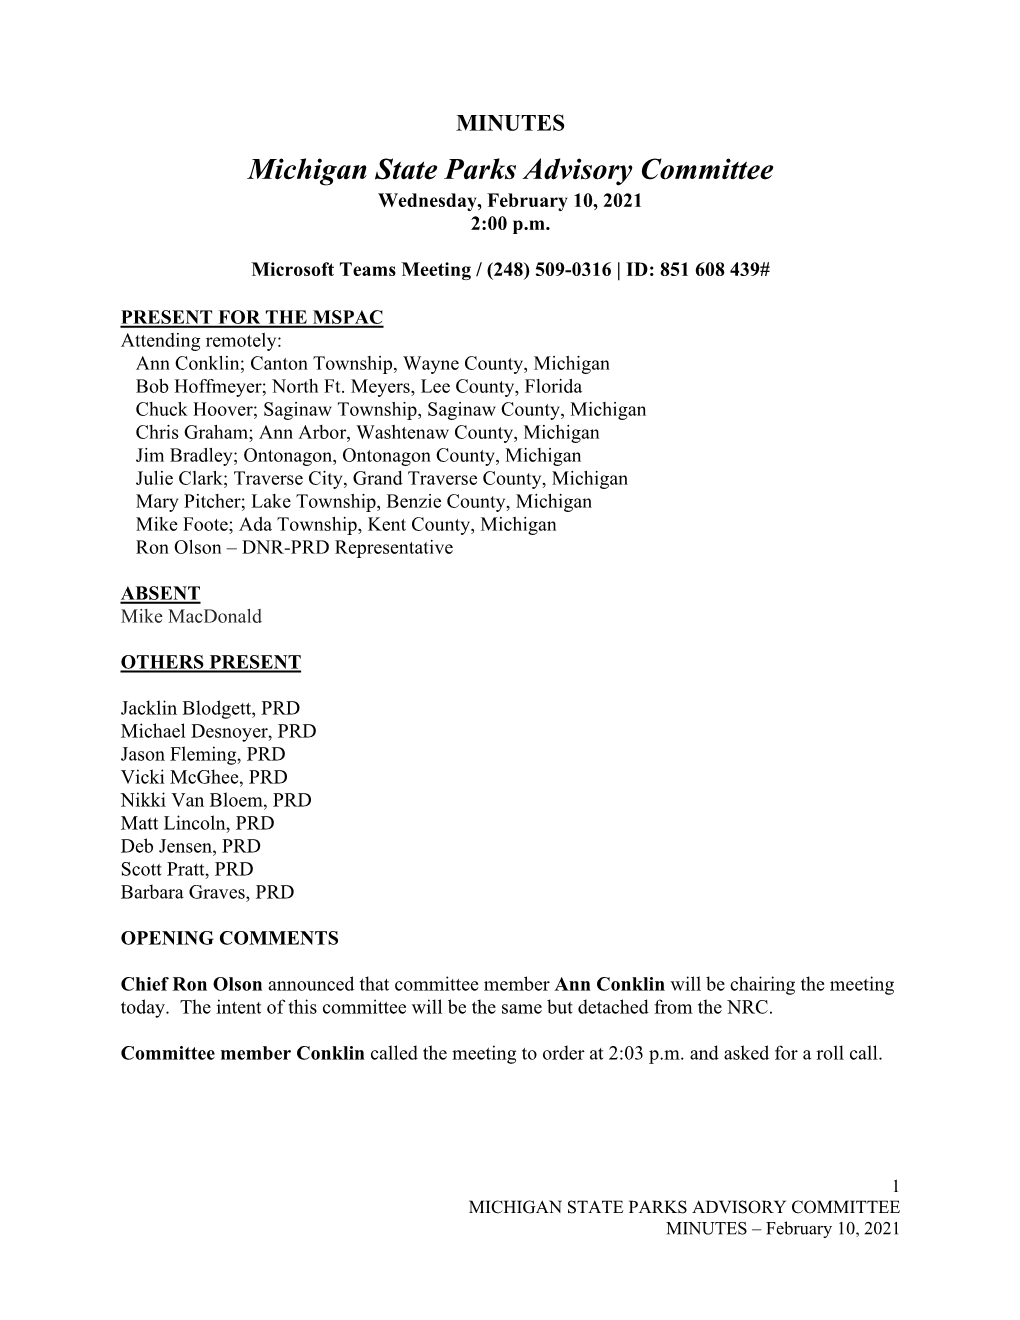 Michigan State Parks Advisory Committee Wednesday, February 10, 2021 2:00 P.M